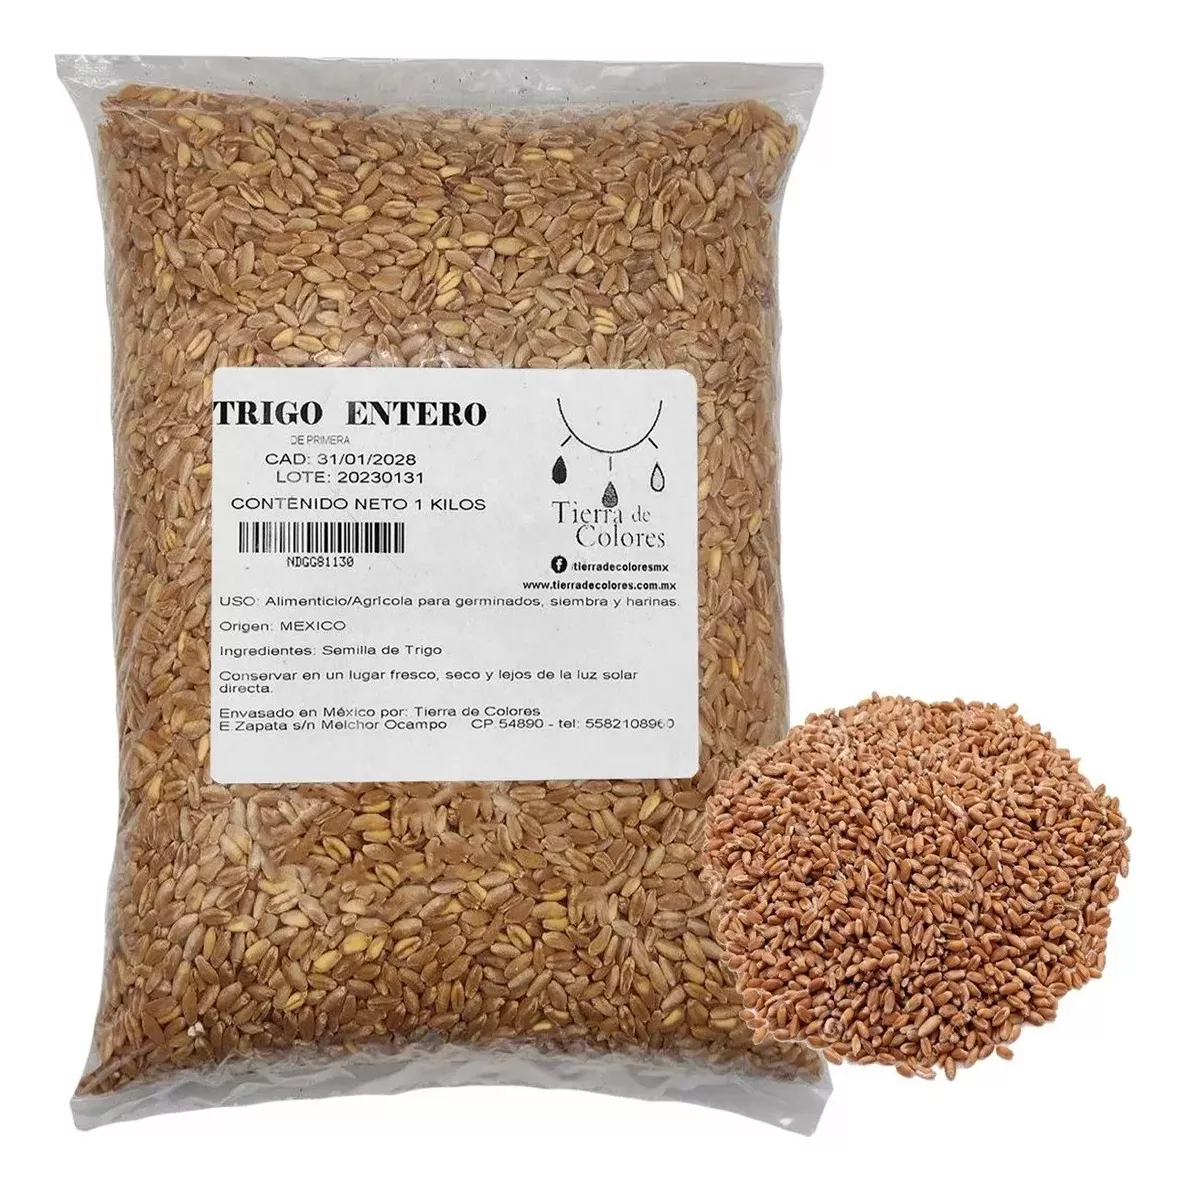 Tercera imagen para búsqueda de trigo sarraceno por kilo